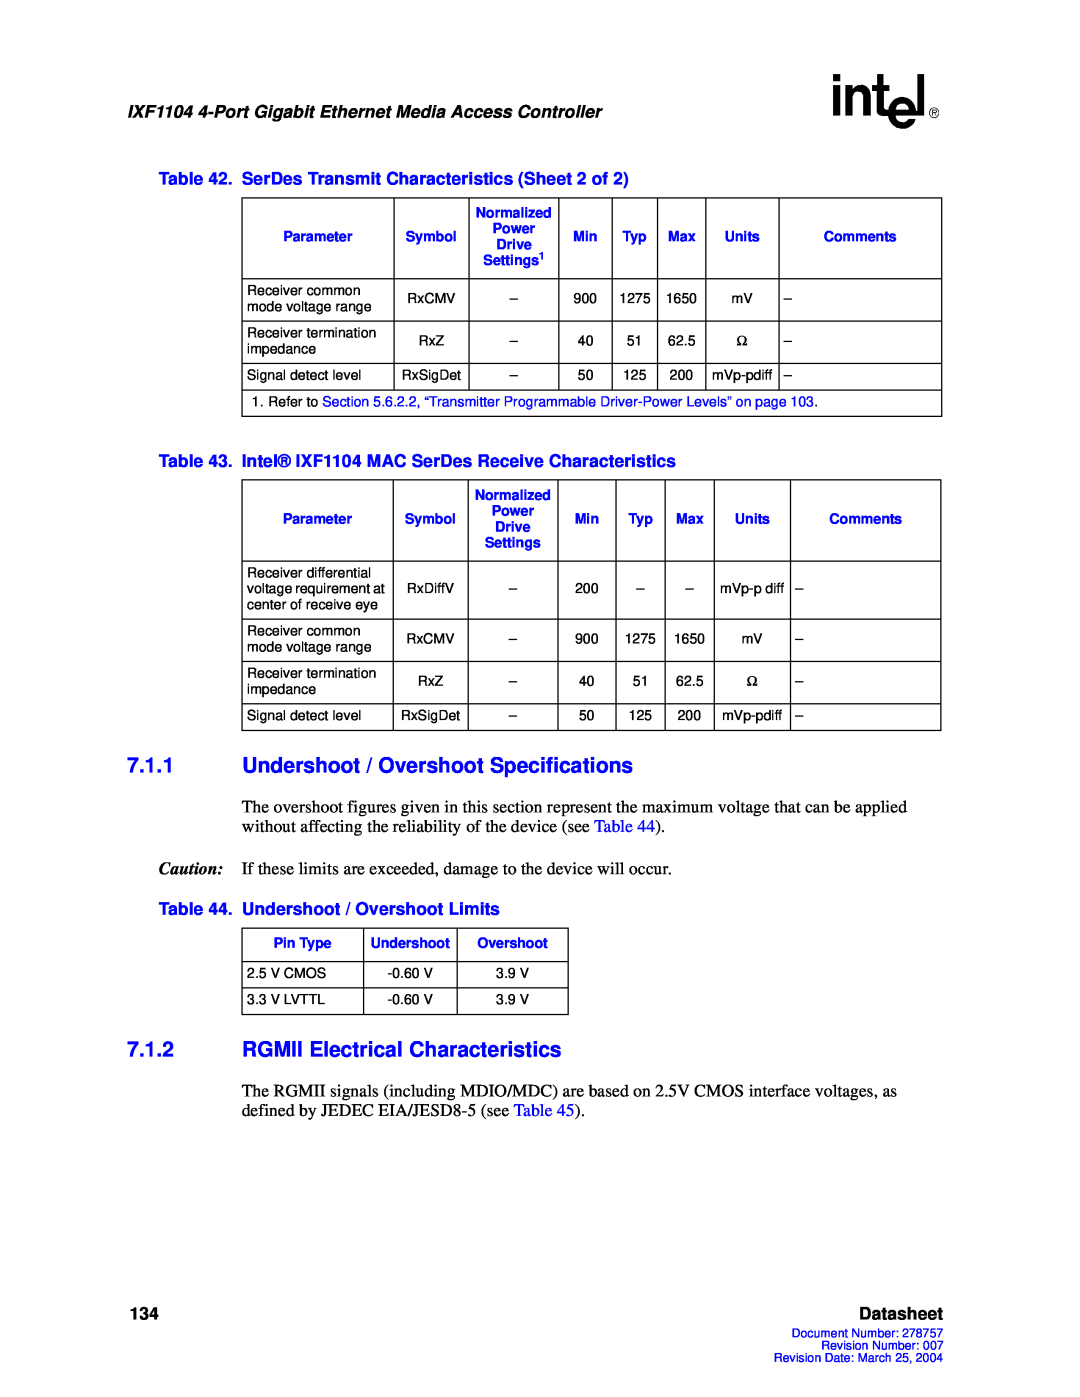 Intel IXF1104 manual 7.1.1Undershoot / Overshoot Specifications, 7.1.2RGMII Electrical Characteristics, Datasheet 